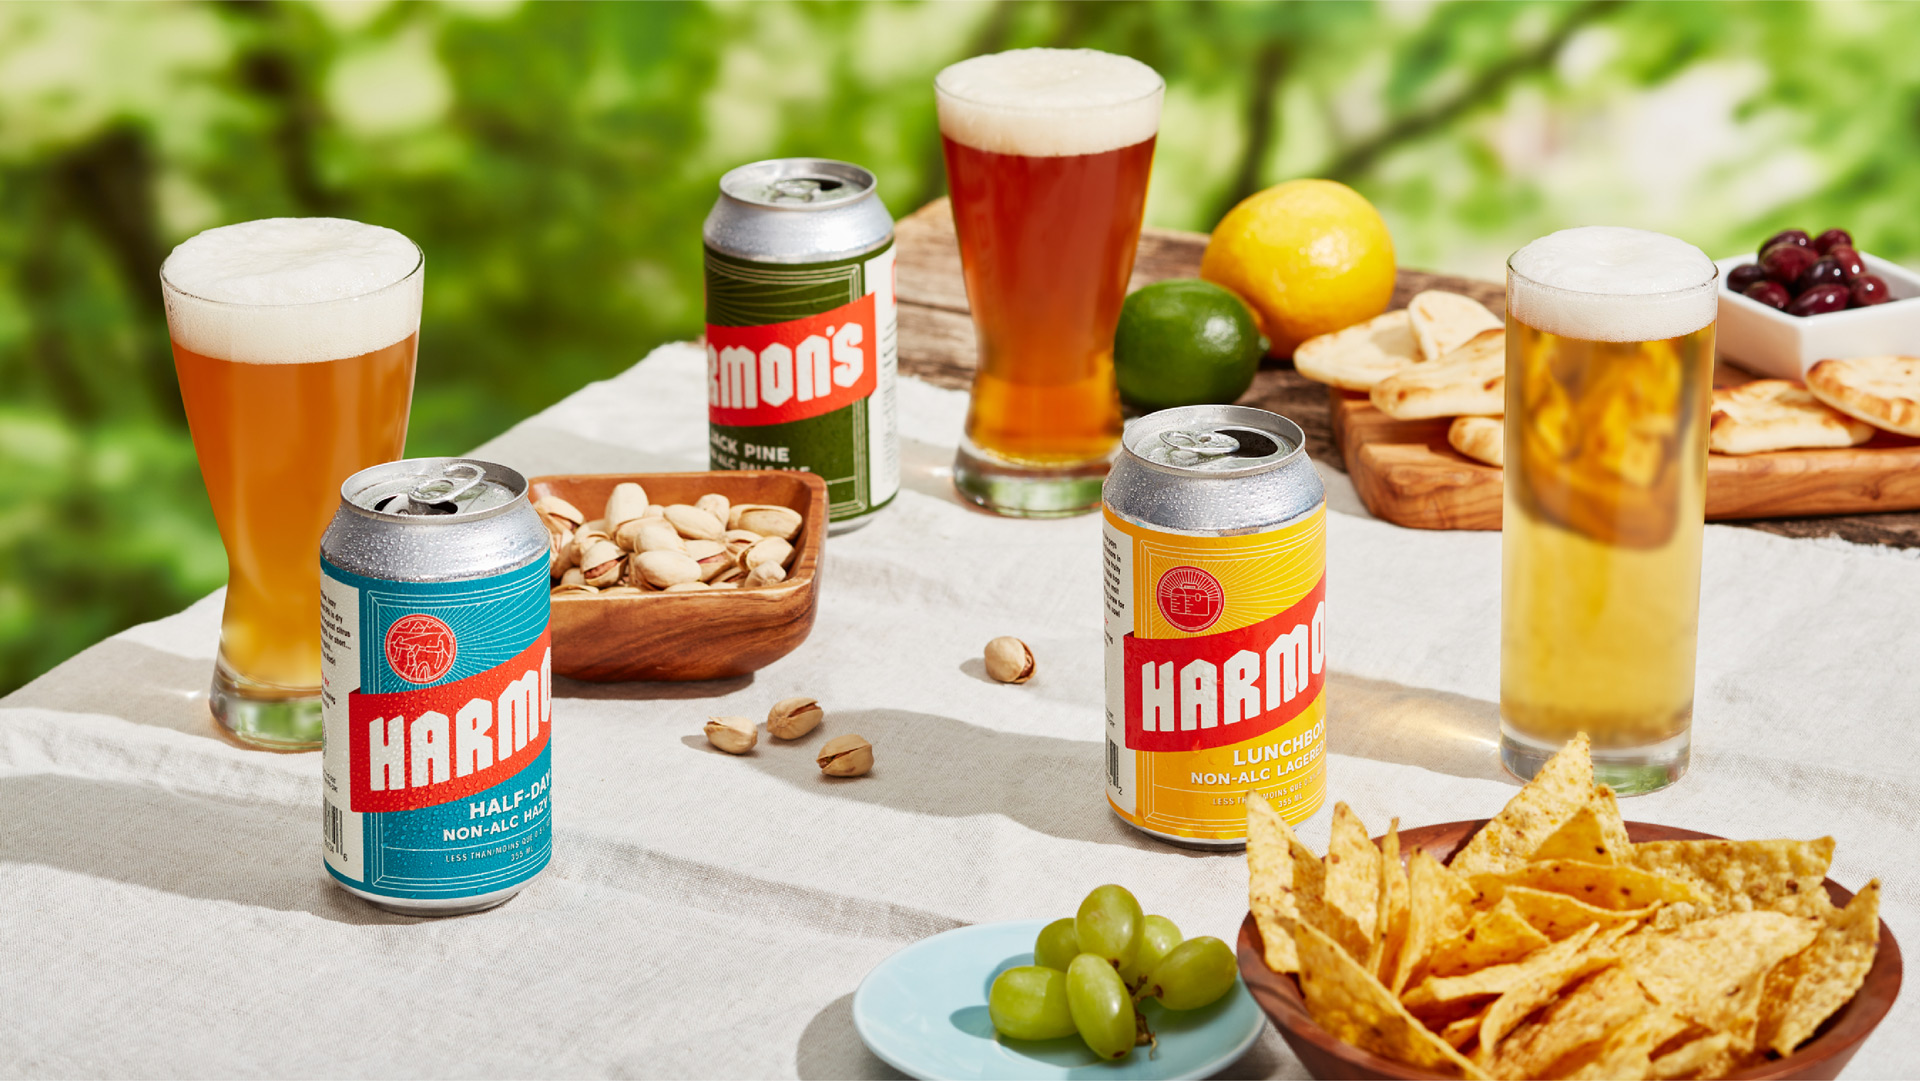 Harmon's beer cans design by Marta Ryczko